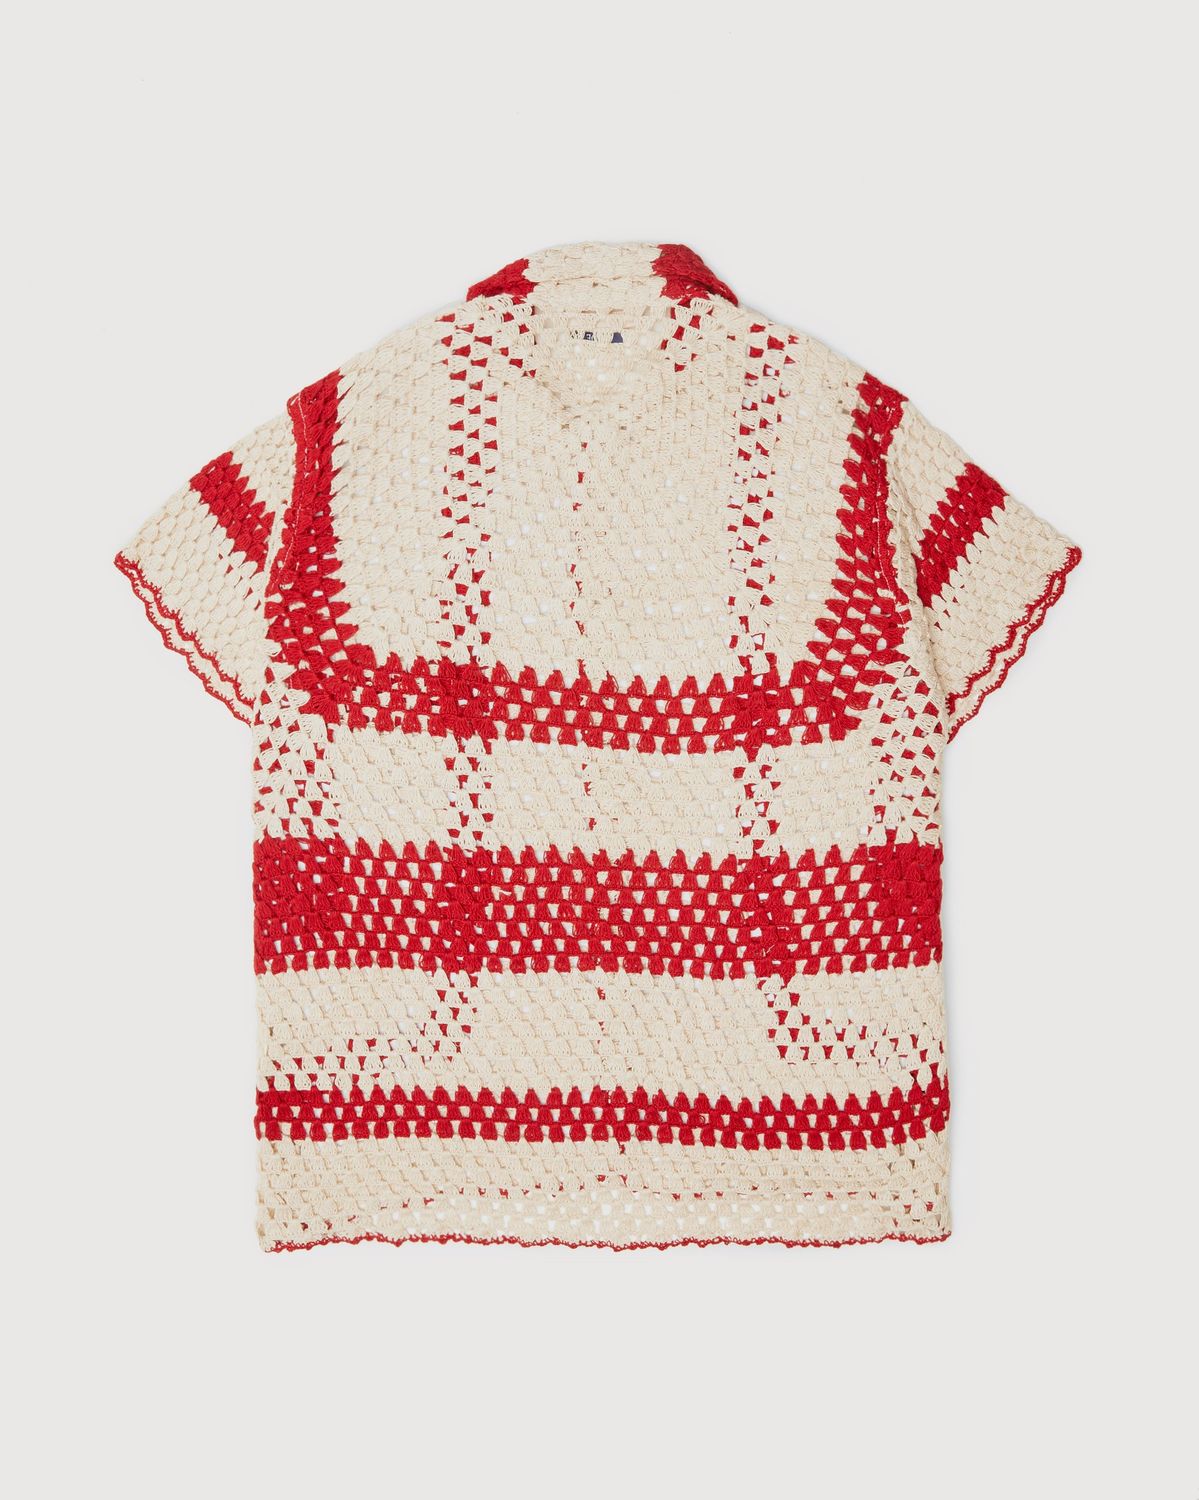 Bode – Crochet Big Top Shirt White Red - Shortsleeve Shirts - Beige - Image 2